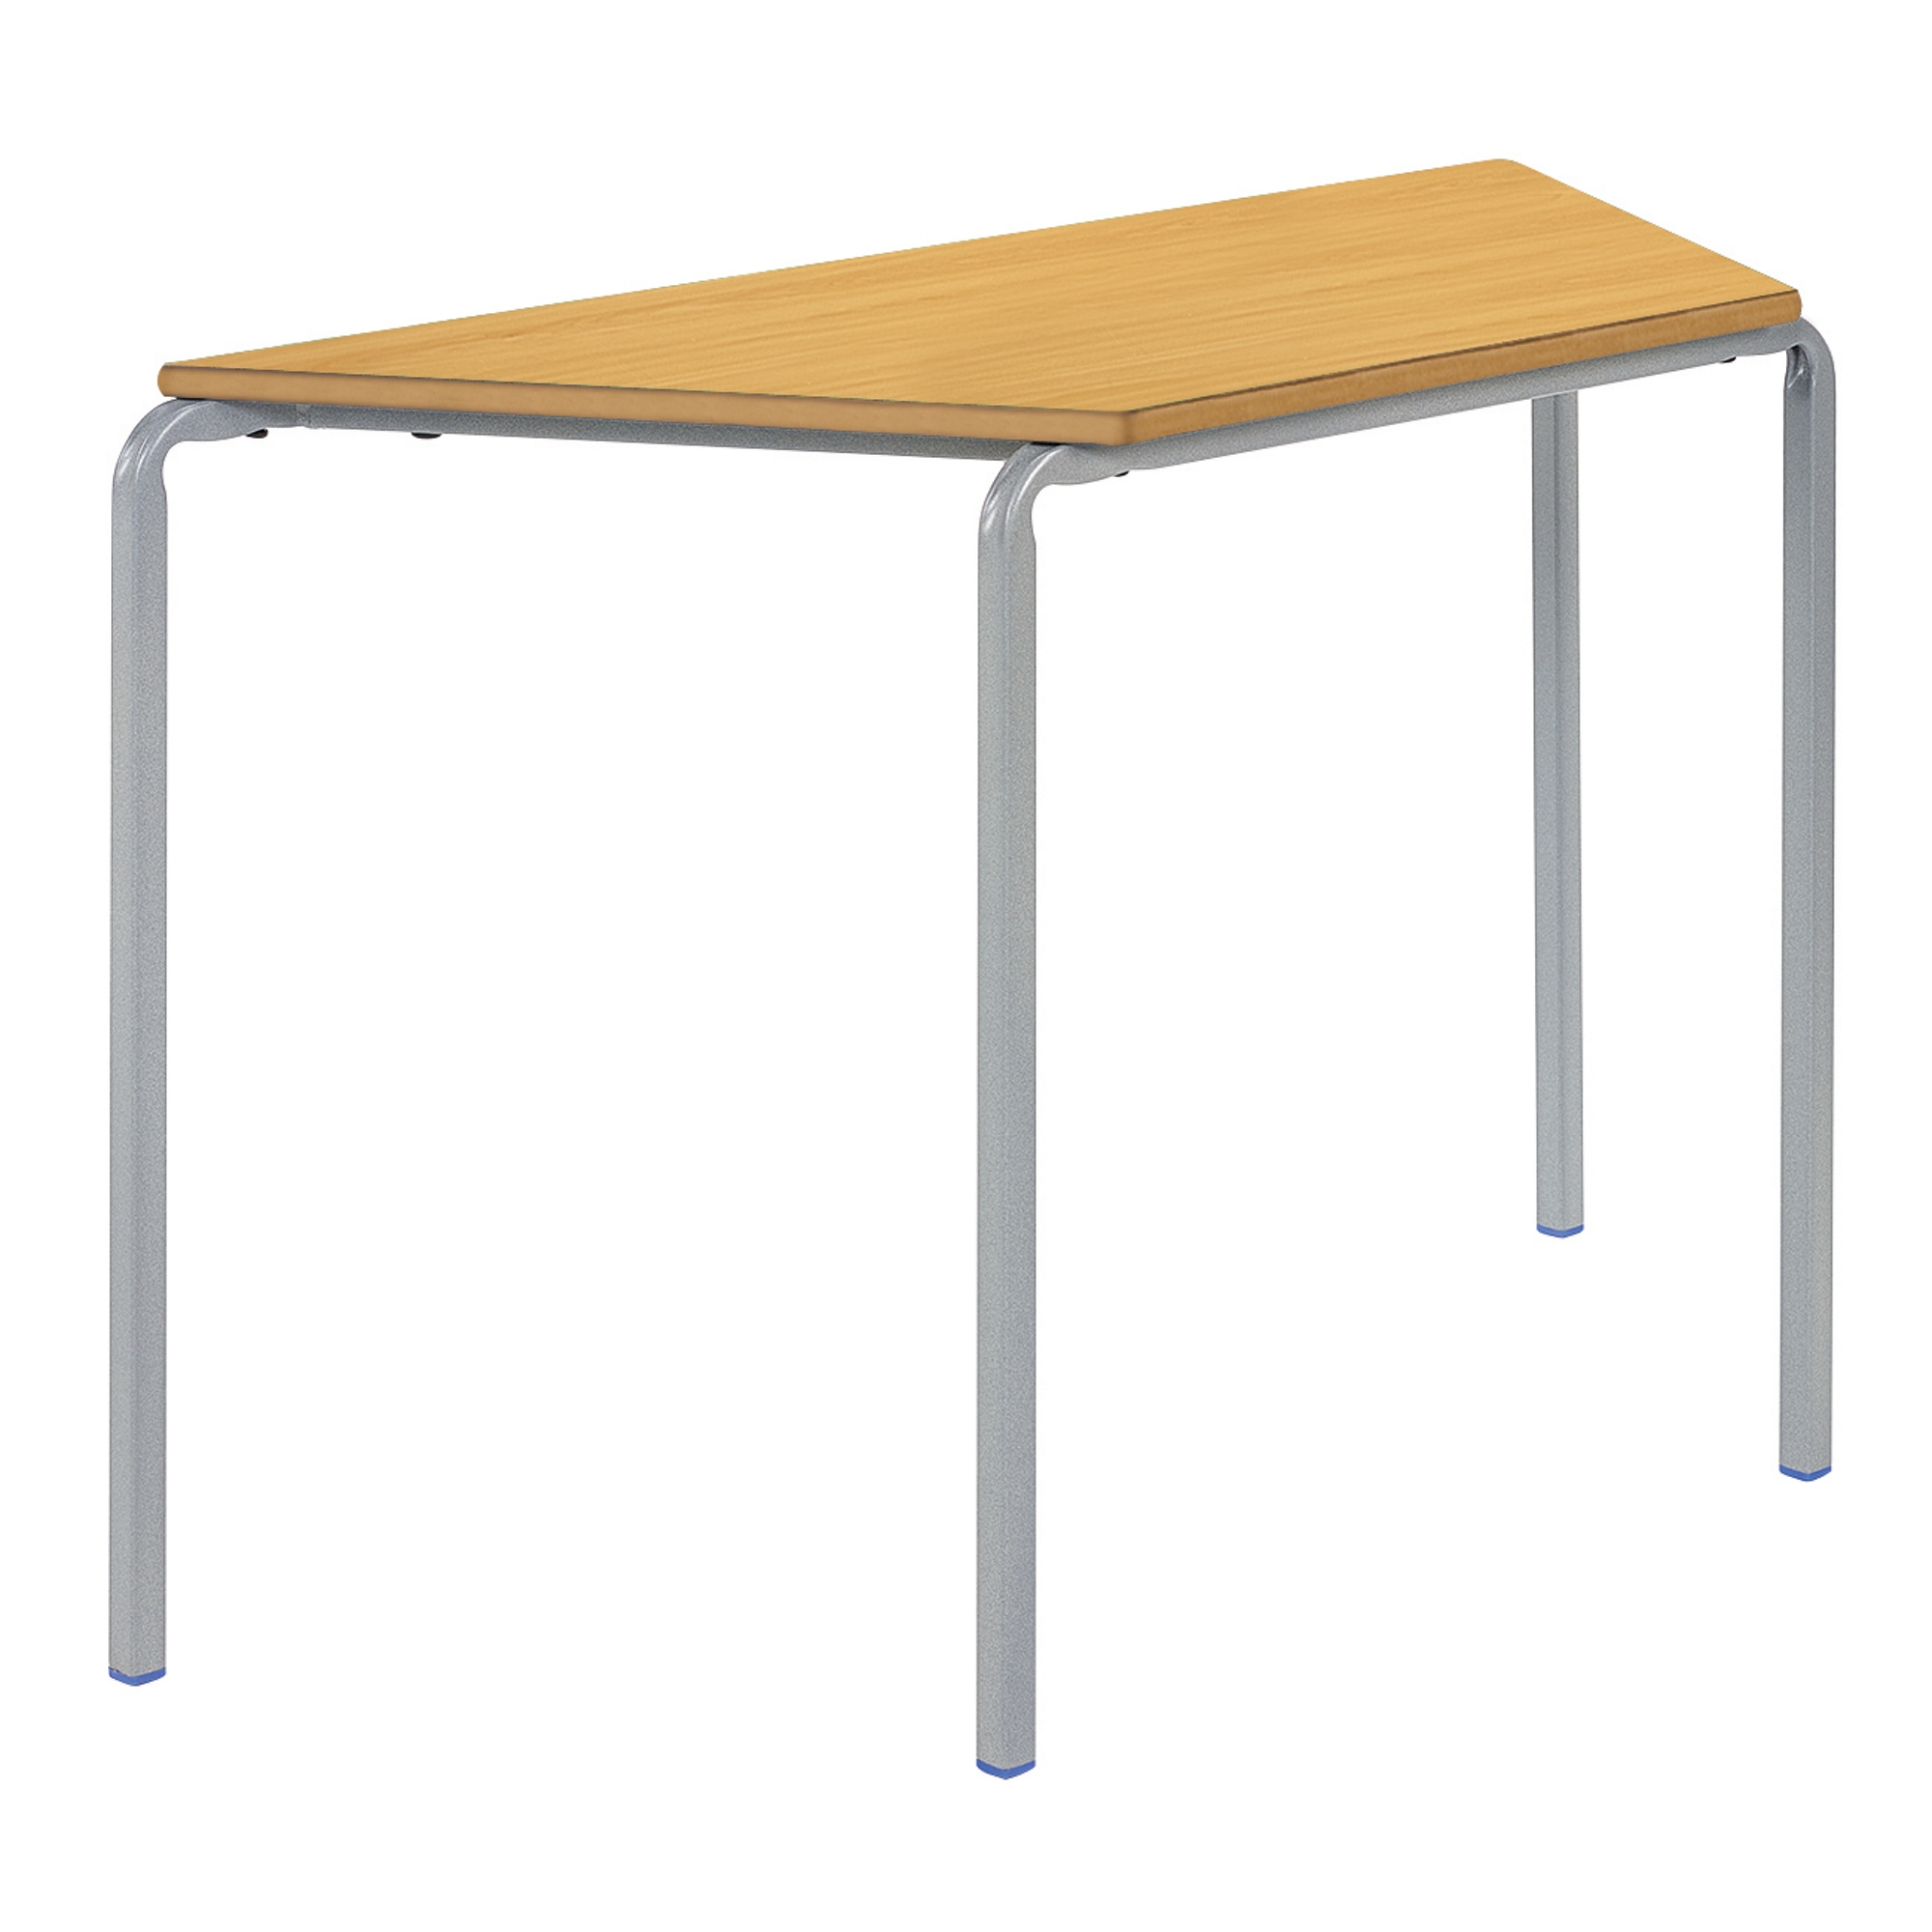 Classmates Trapezoidal Crushed Bent Classroom Table - 1100 x 550 x 530mm - Beech